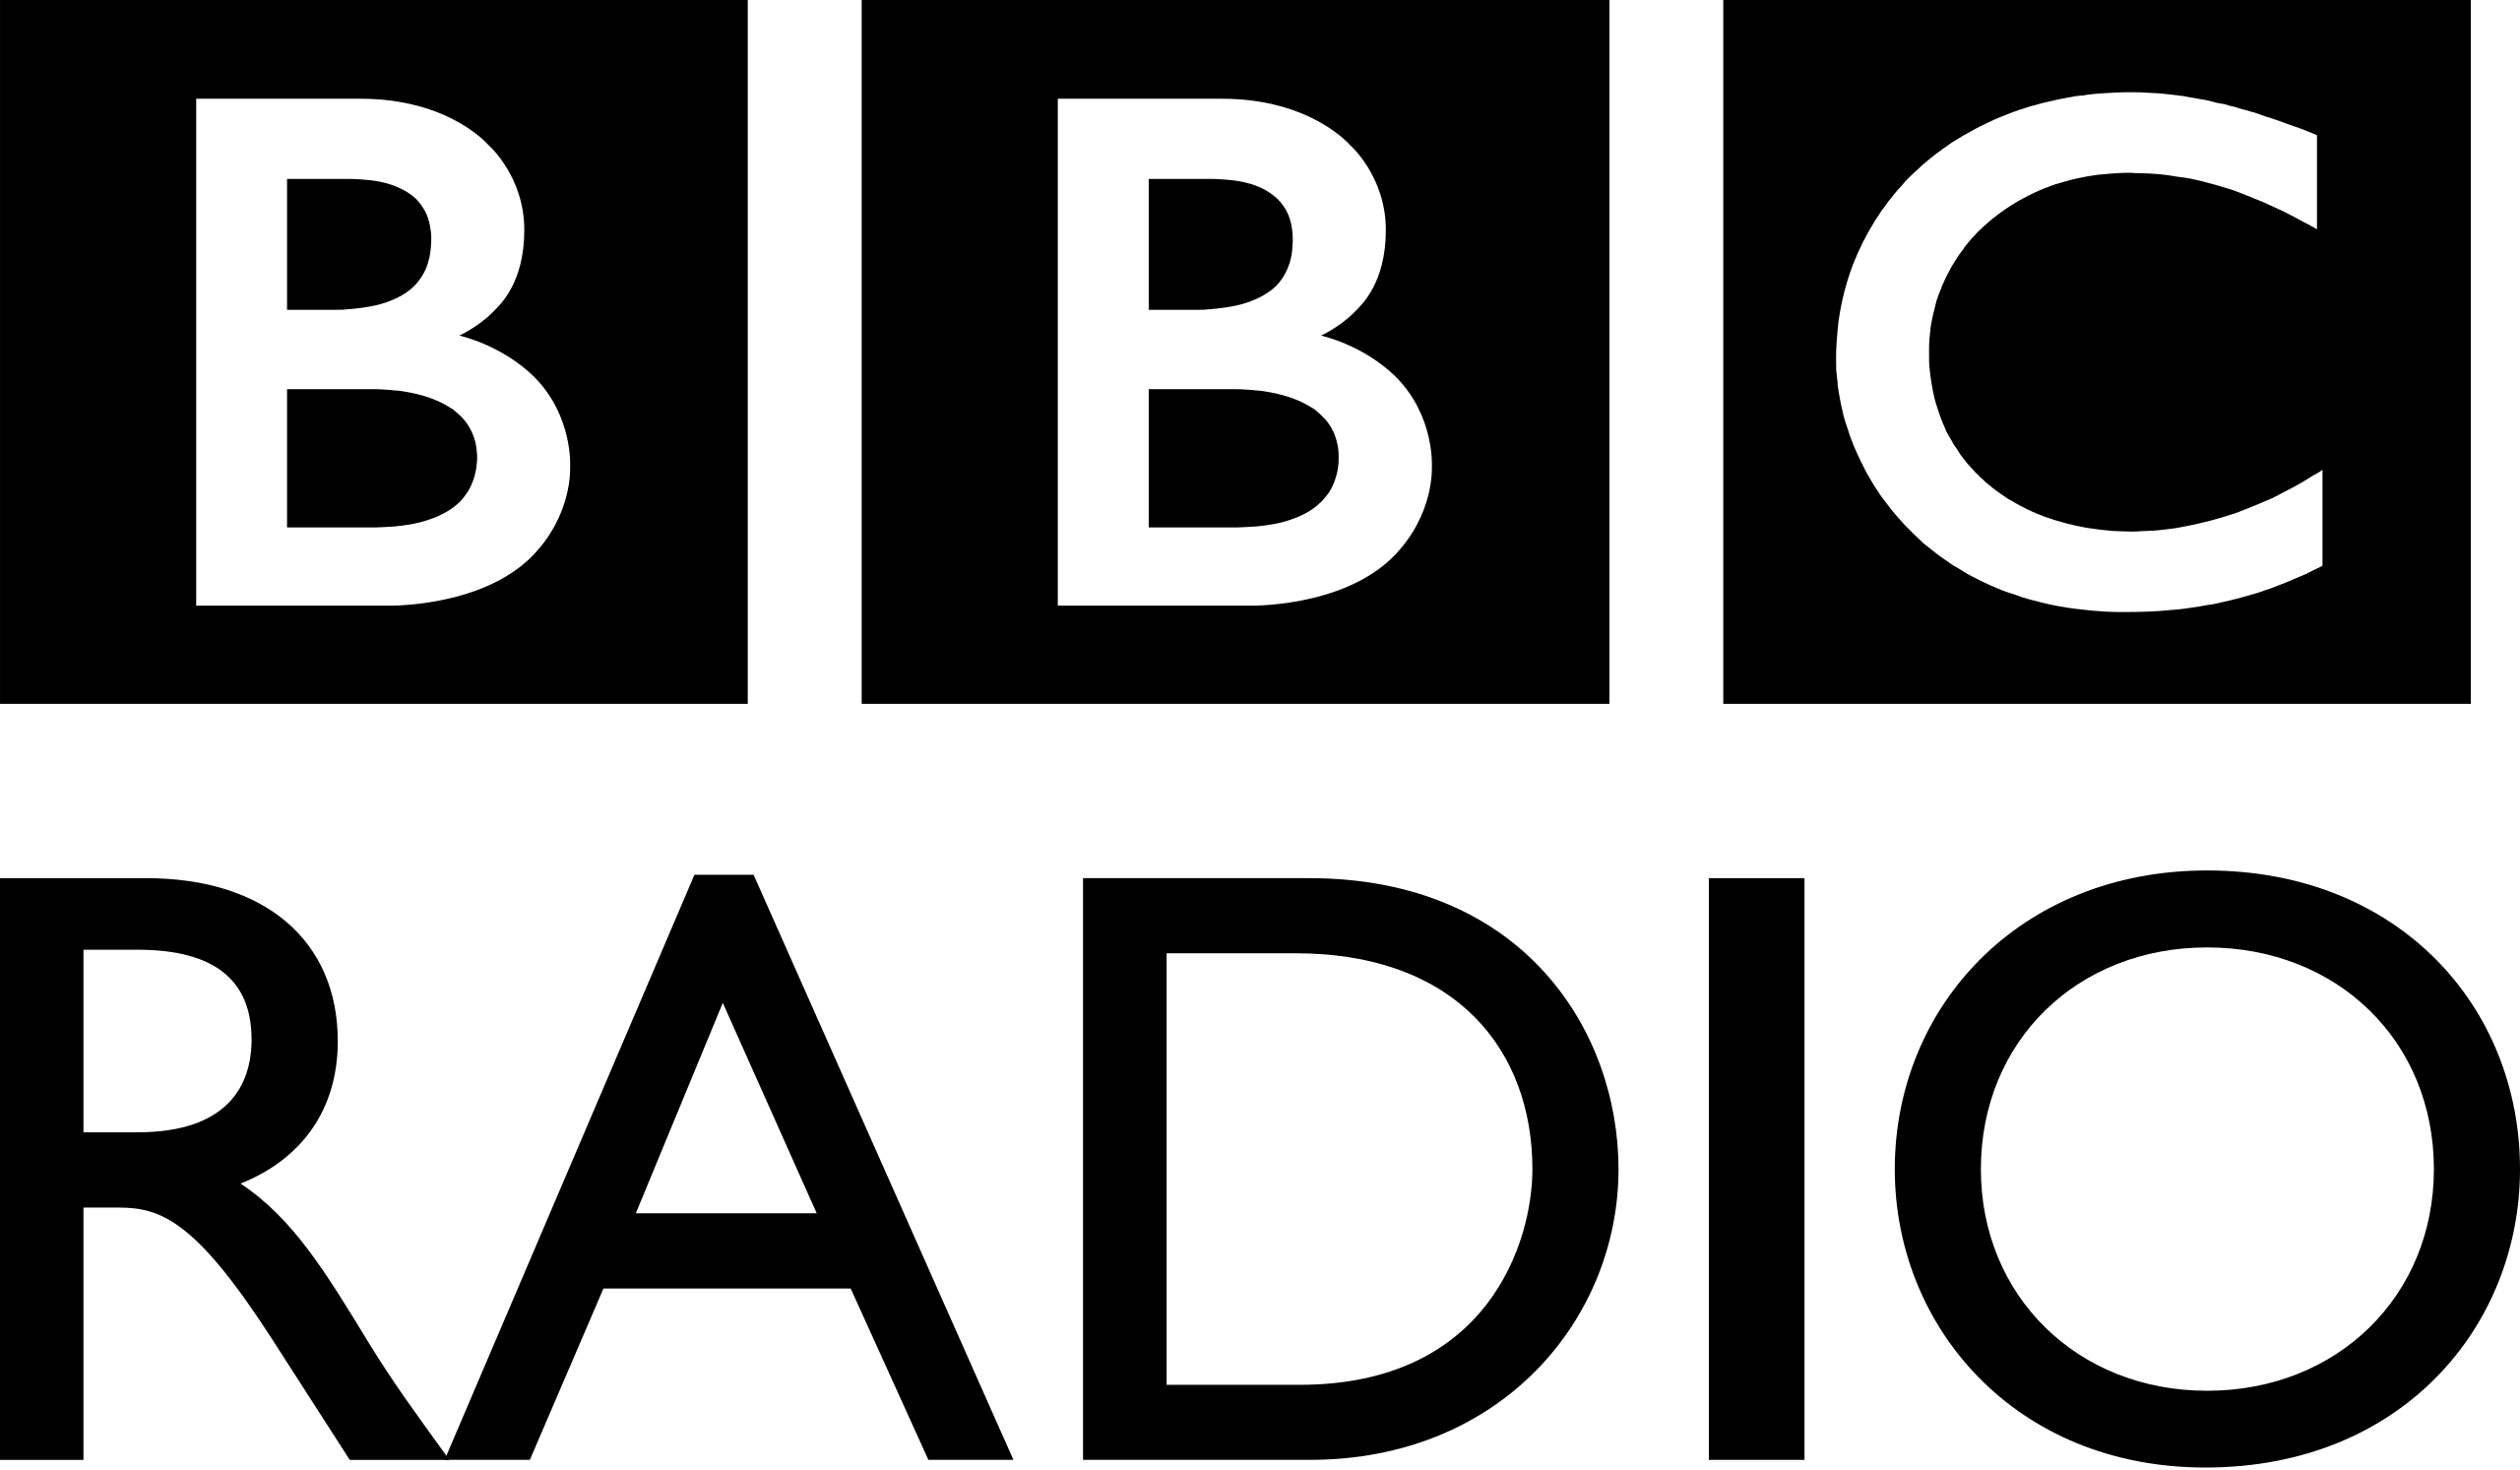 BBC Logo PNG Image HD